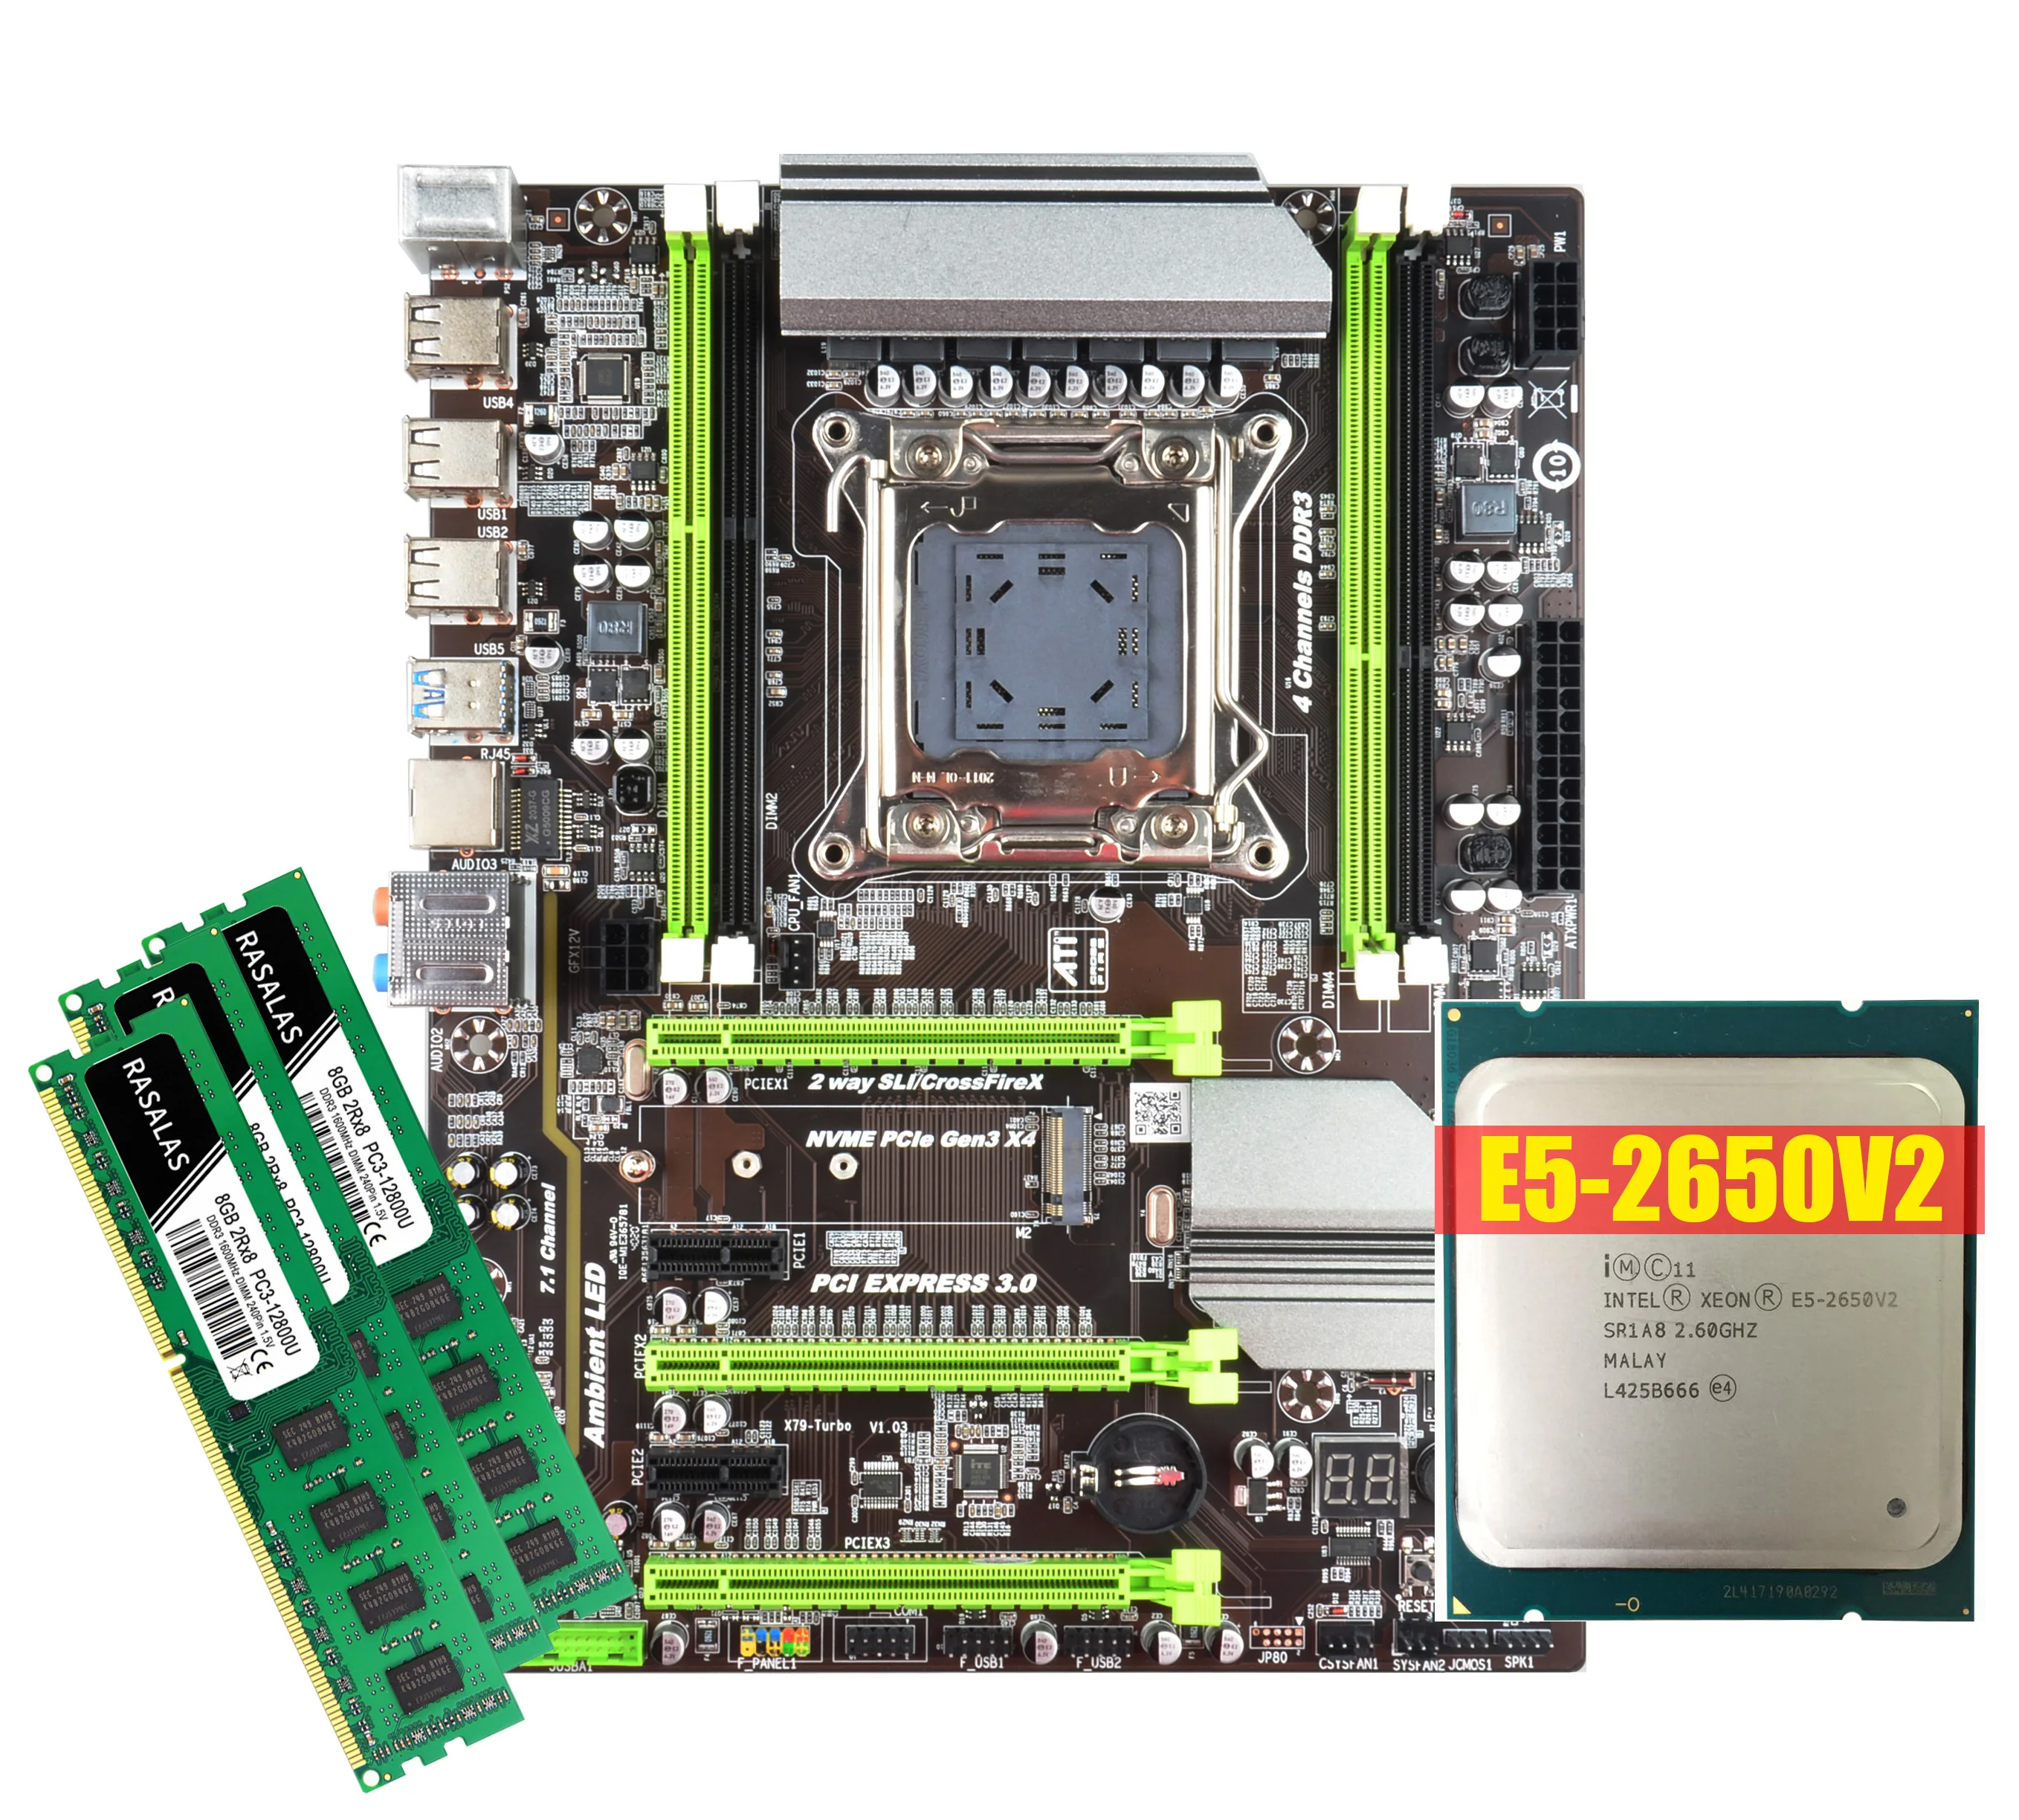 

X79 motherboard kit with LGA2011, Combos Xeon E5 2650 V2 CPU, 16GB memory server RAM